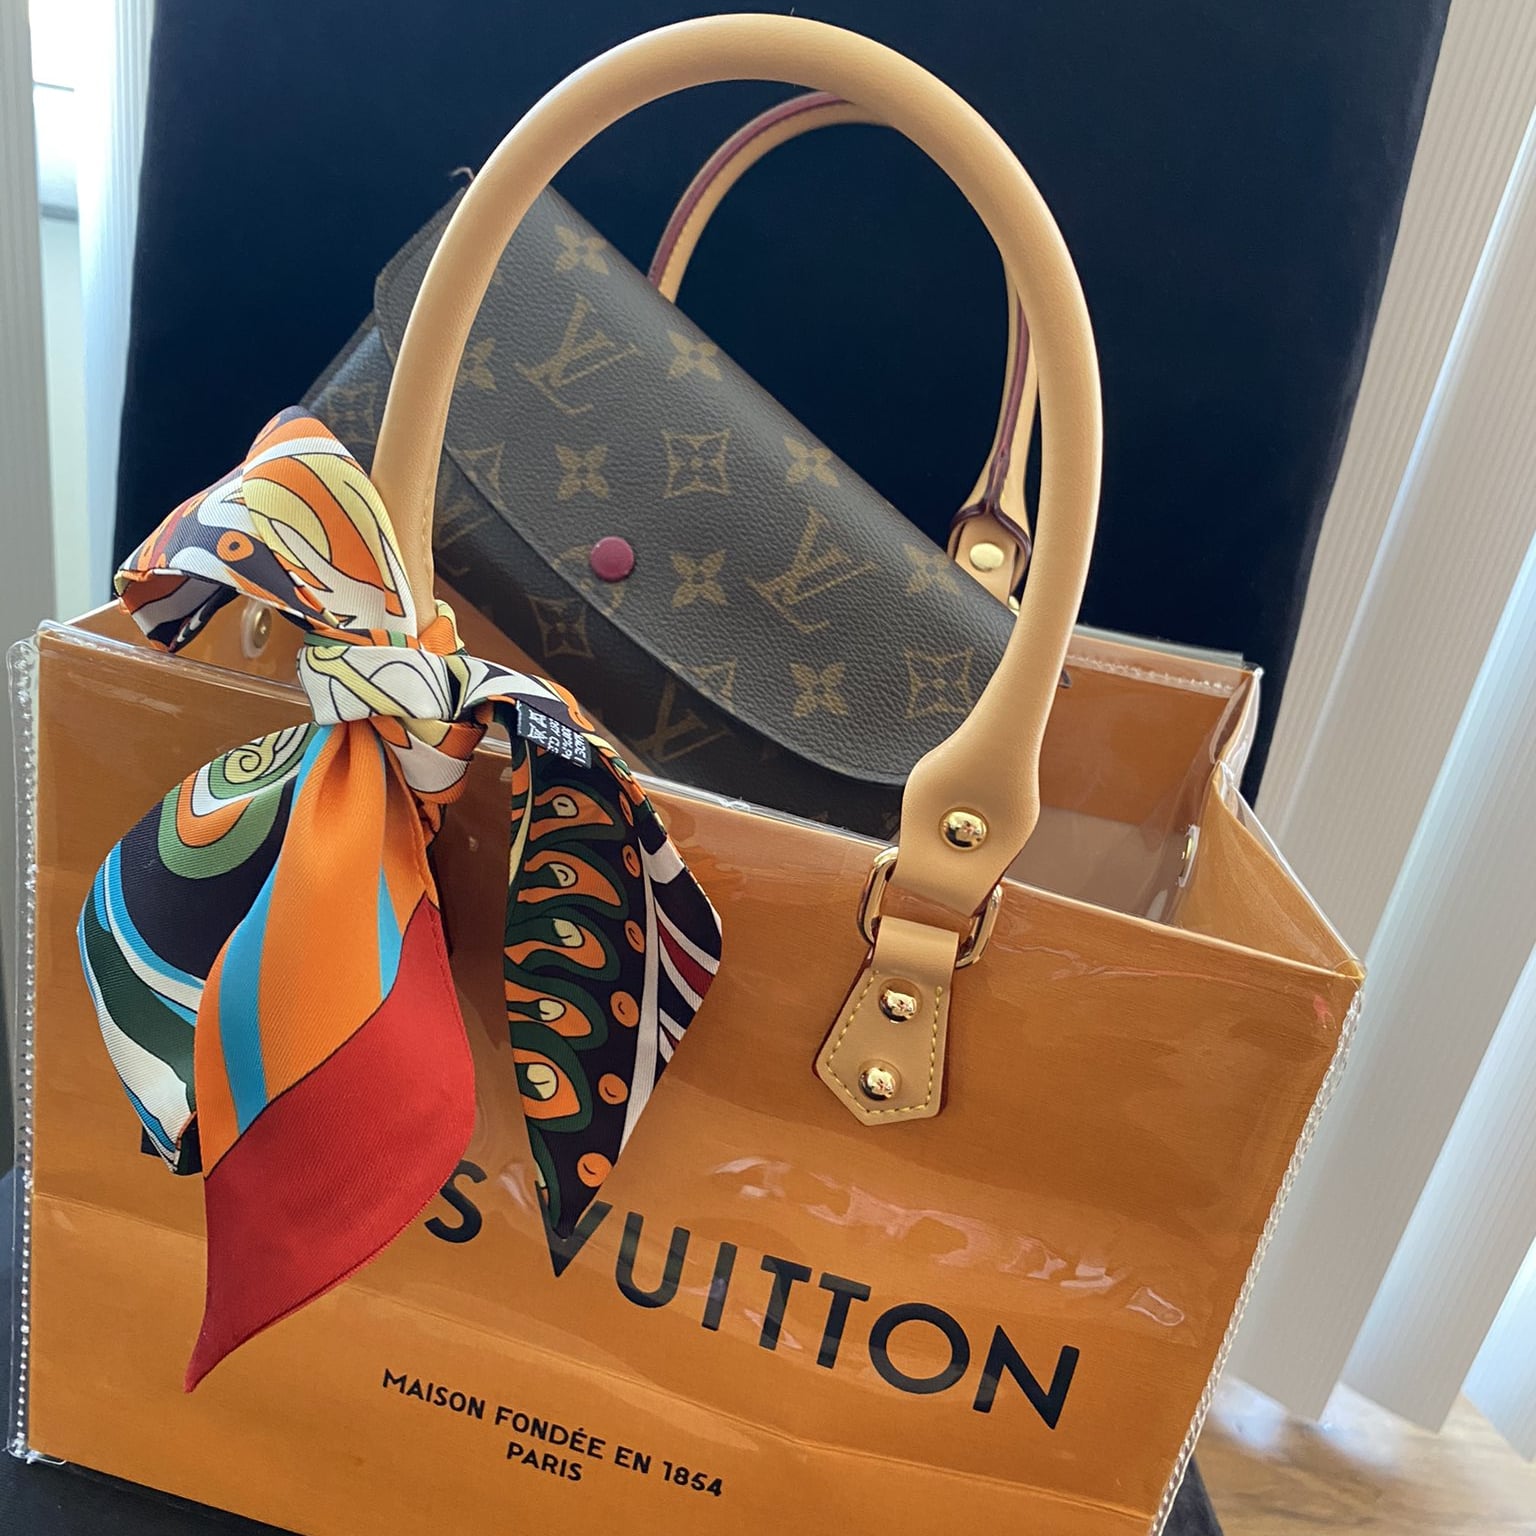 Create Vuitton PVC Bag This TikTok DIY | POPSUGAR Fashion